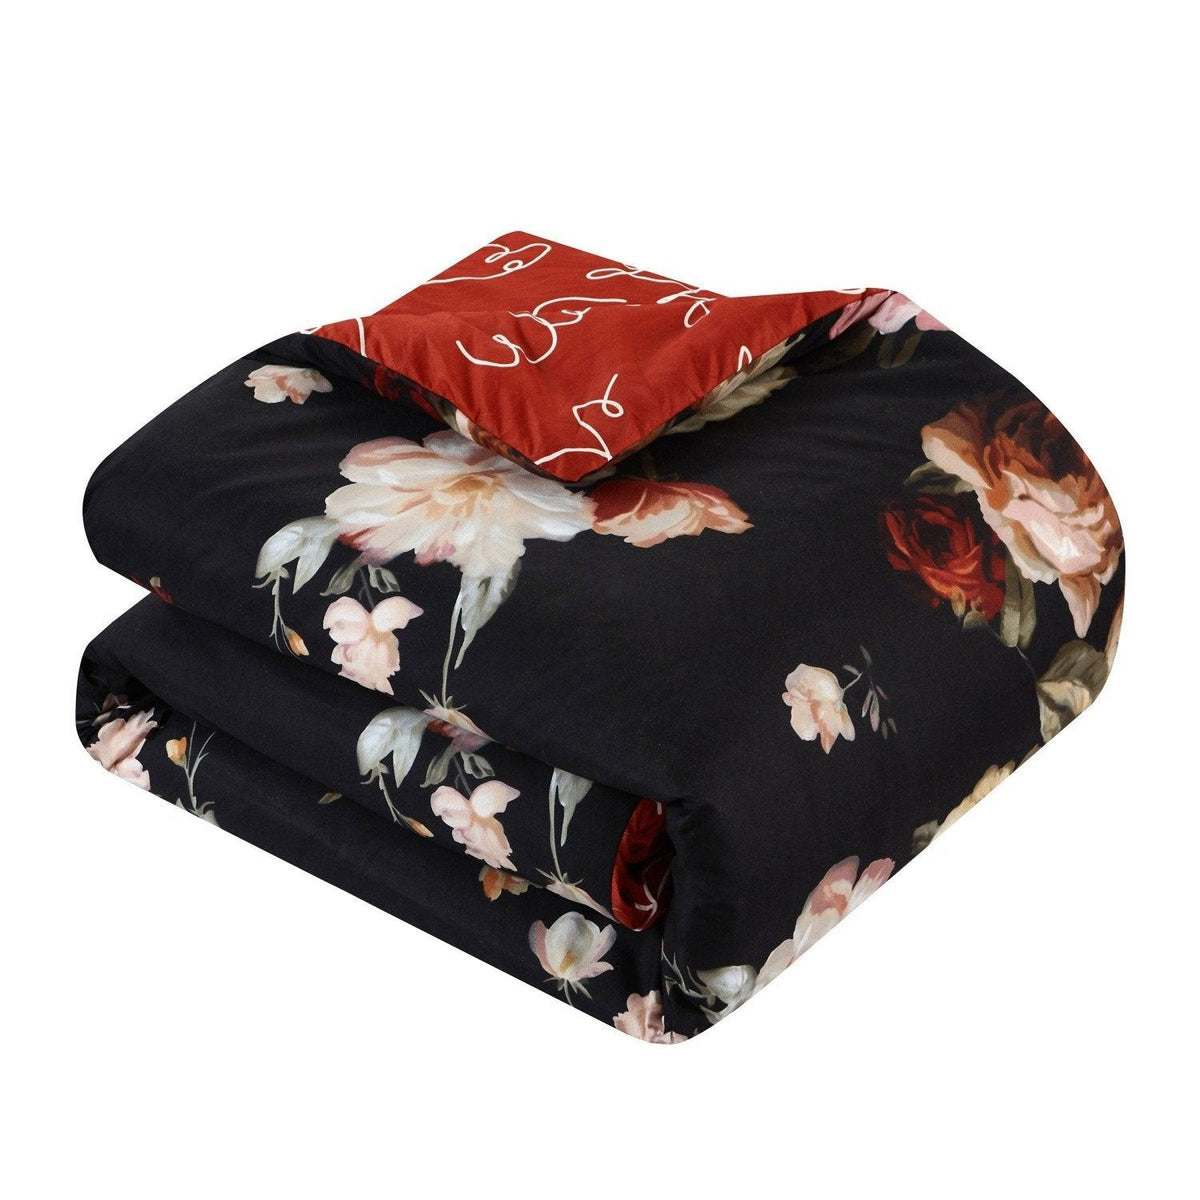 Chic Home Enid 5 Piece Reversible Floral Comforter Set Bedding